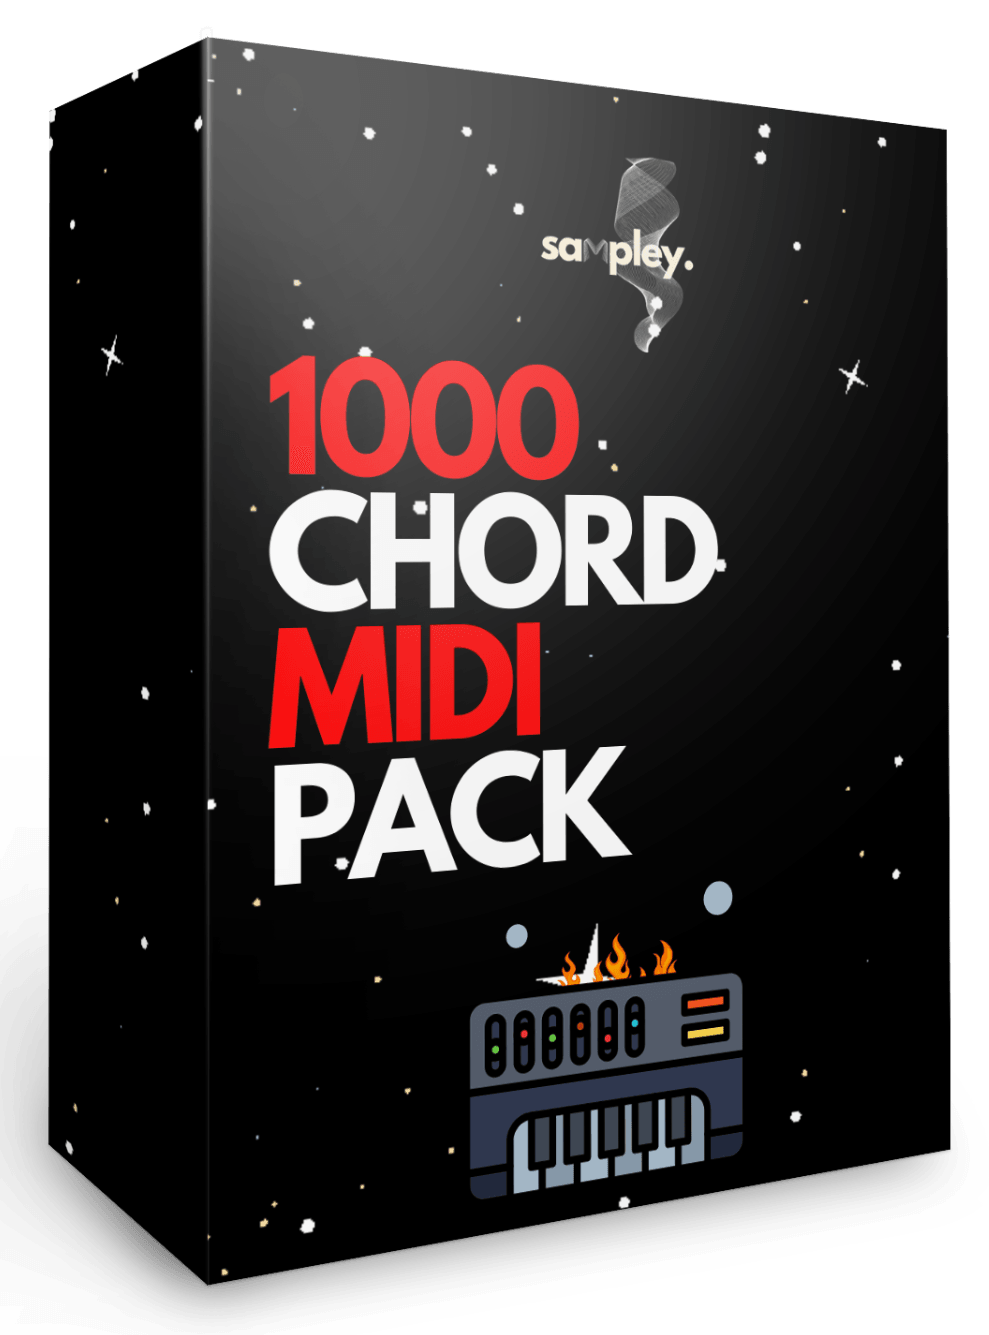 1000 MIDI Chords Pack - Sampley 